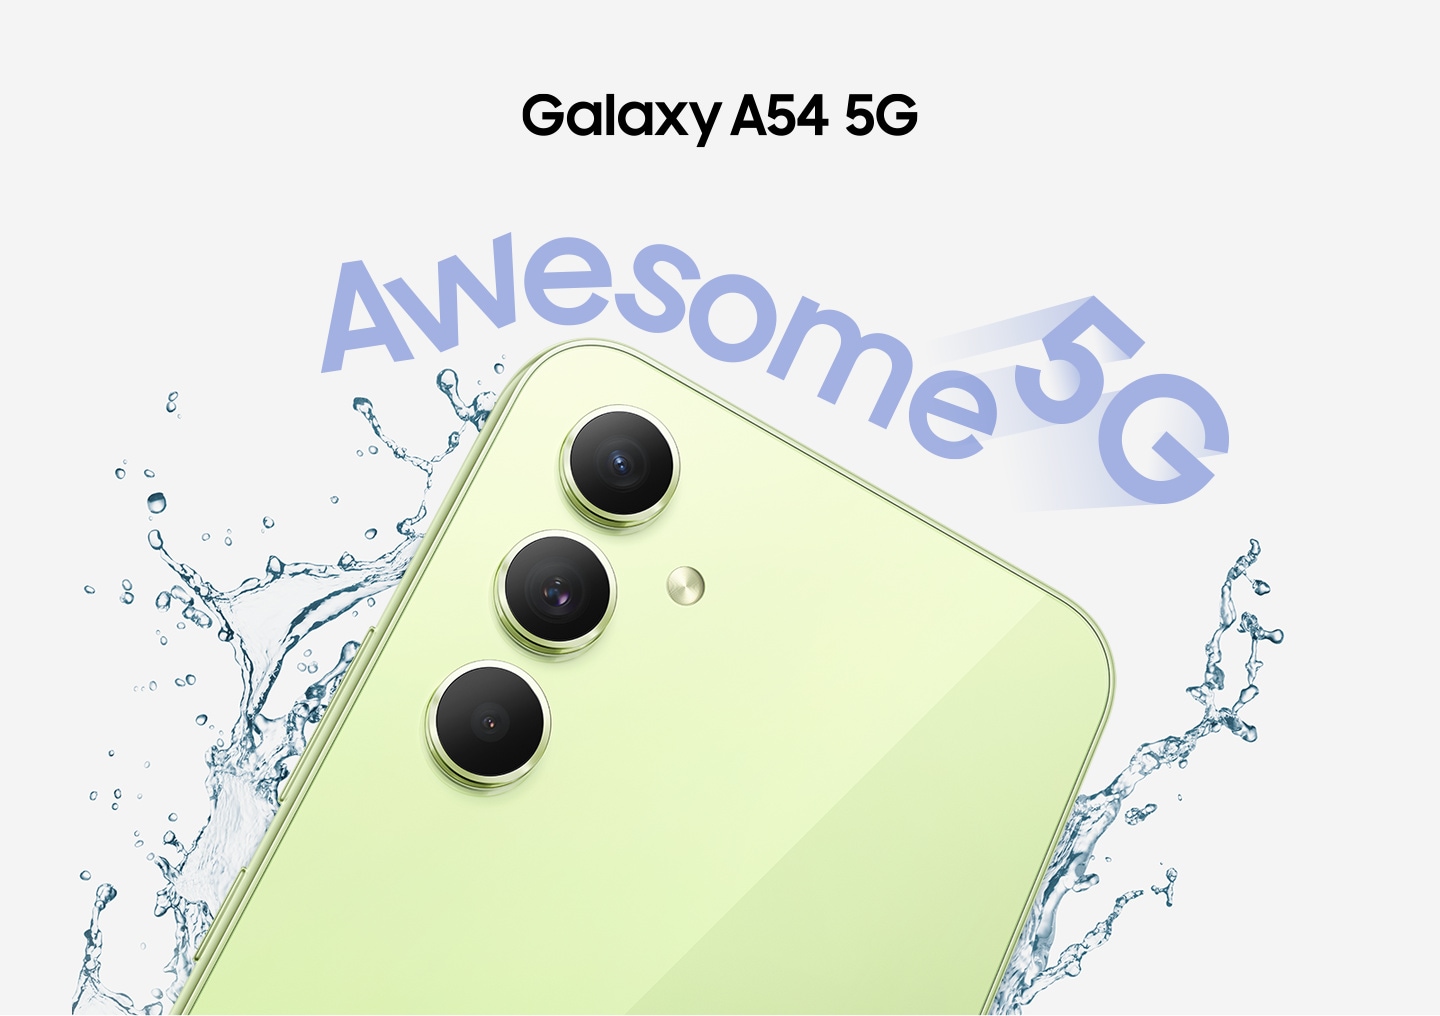 Gornja polovica stražnje strane uređaja Galaxy A54 5G u boji fantastična limeta zelena prikazana je s kapljicama vode koje prskaju oko nje. „Fantastičan 5G“